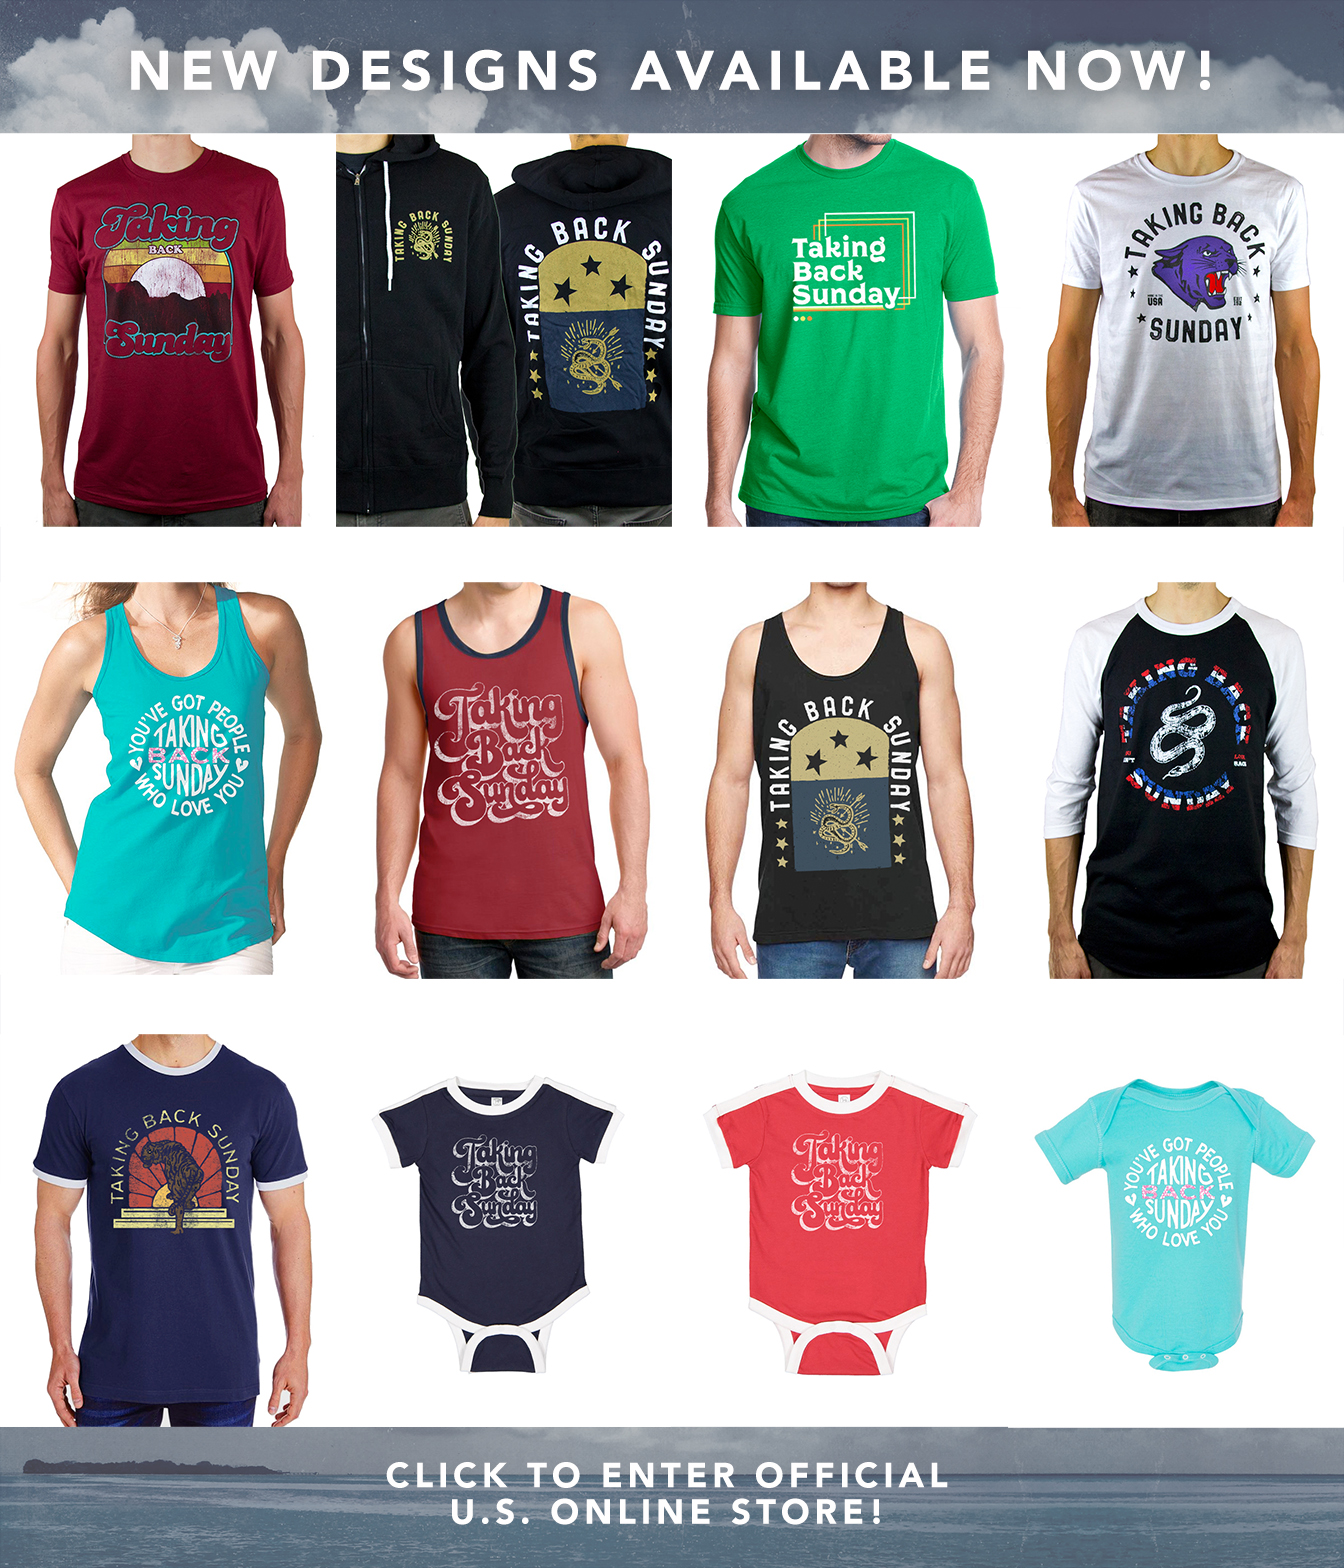 Best Online Graphic Design T Shirt Stores - FerisGraphics